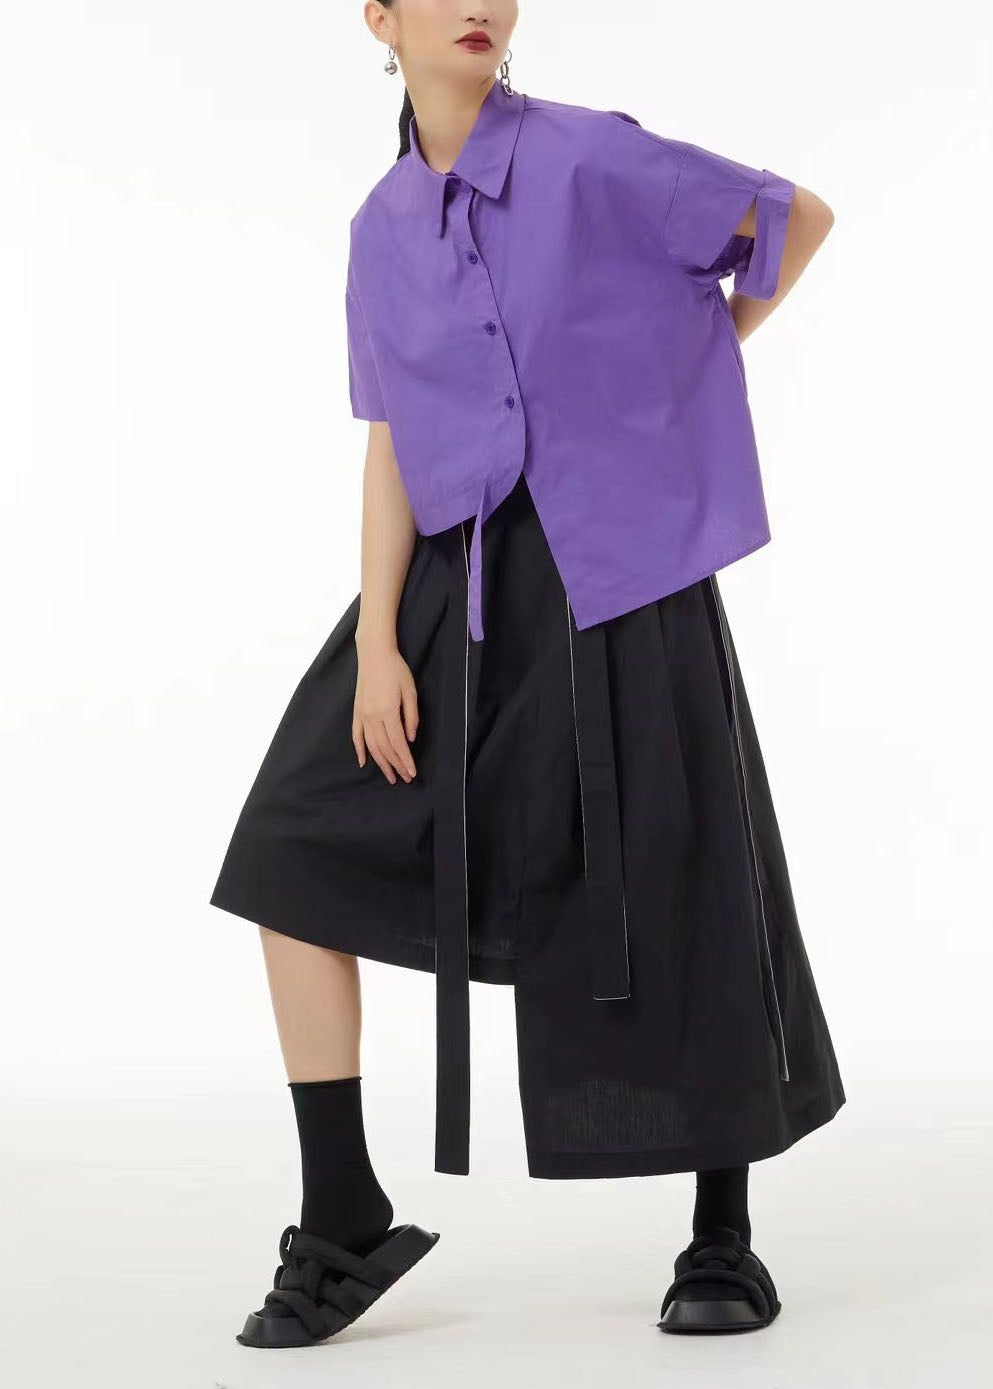 Chic Purple Asymmetrical Design Cotton Blouse Top Summer LC0153